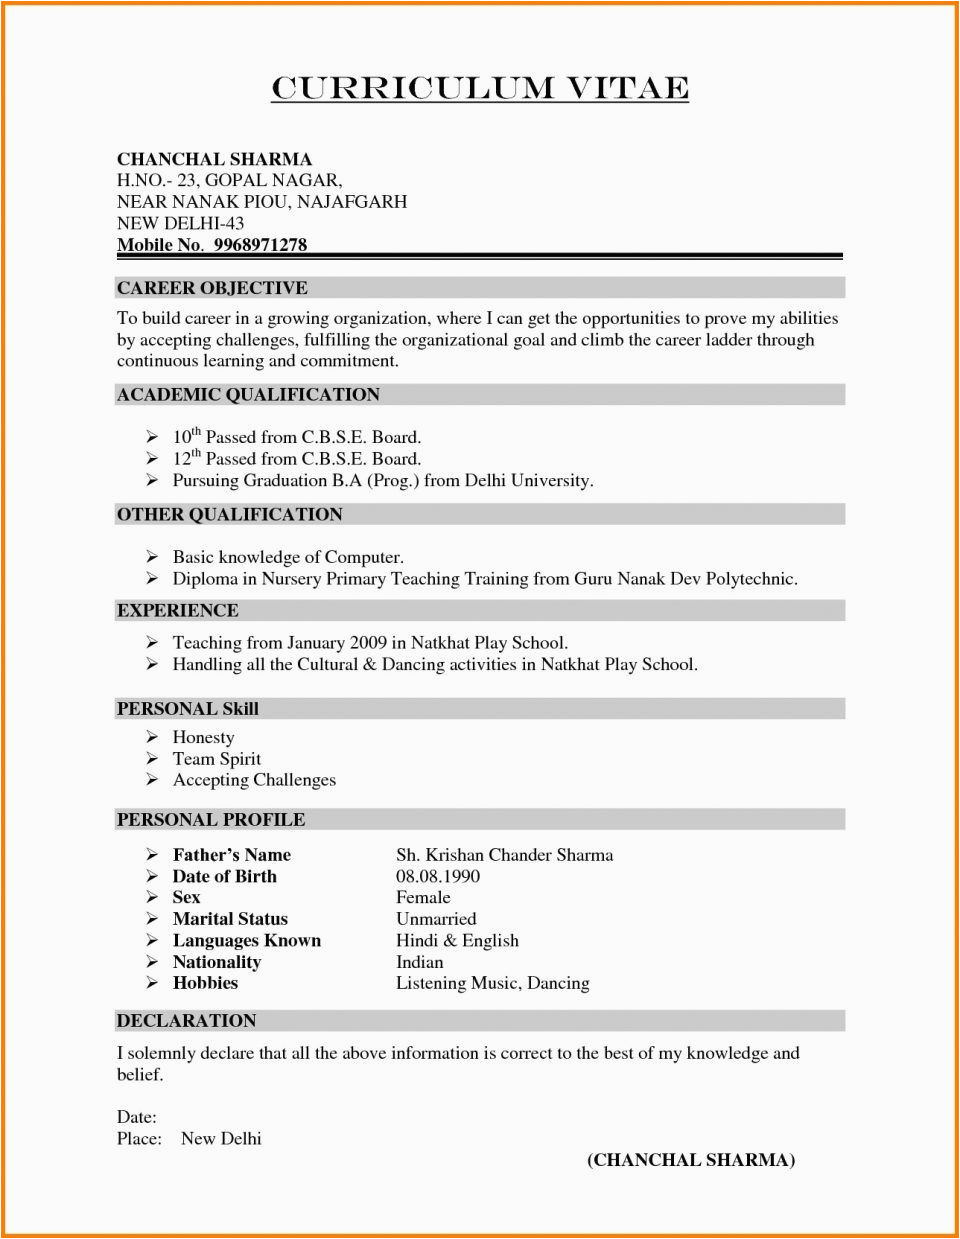 Sample Resume for School Principal Position In India Indian School Teacher Resume format Indian School